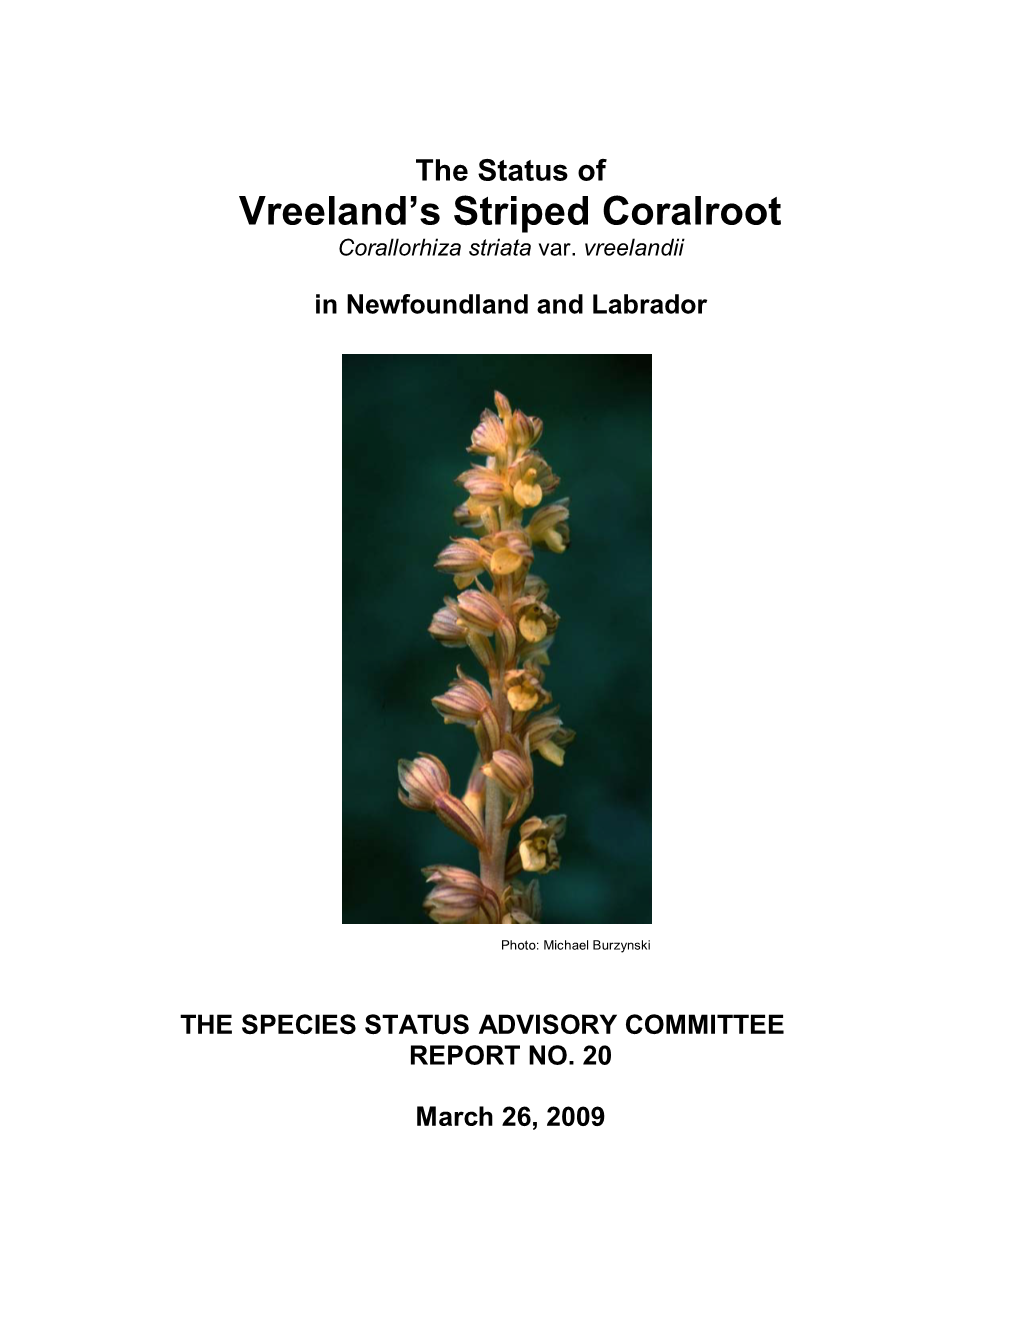 Vreeland's Striped Coralroot